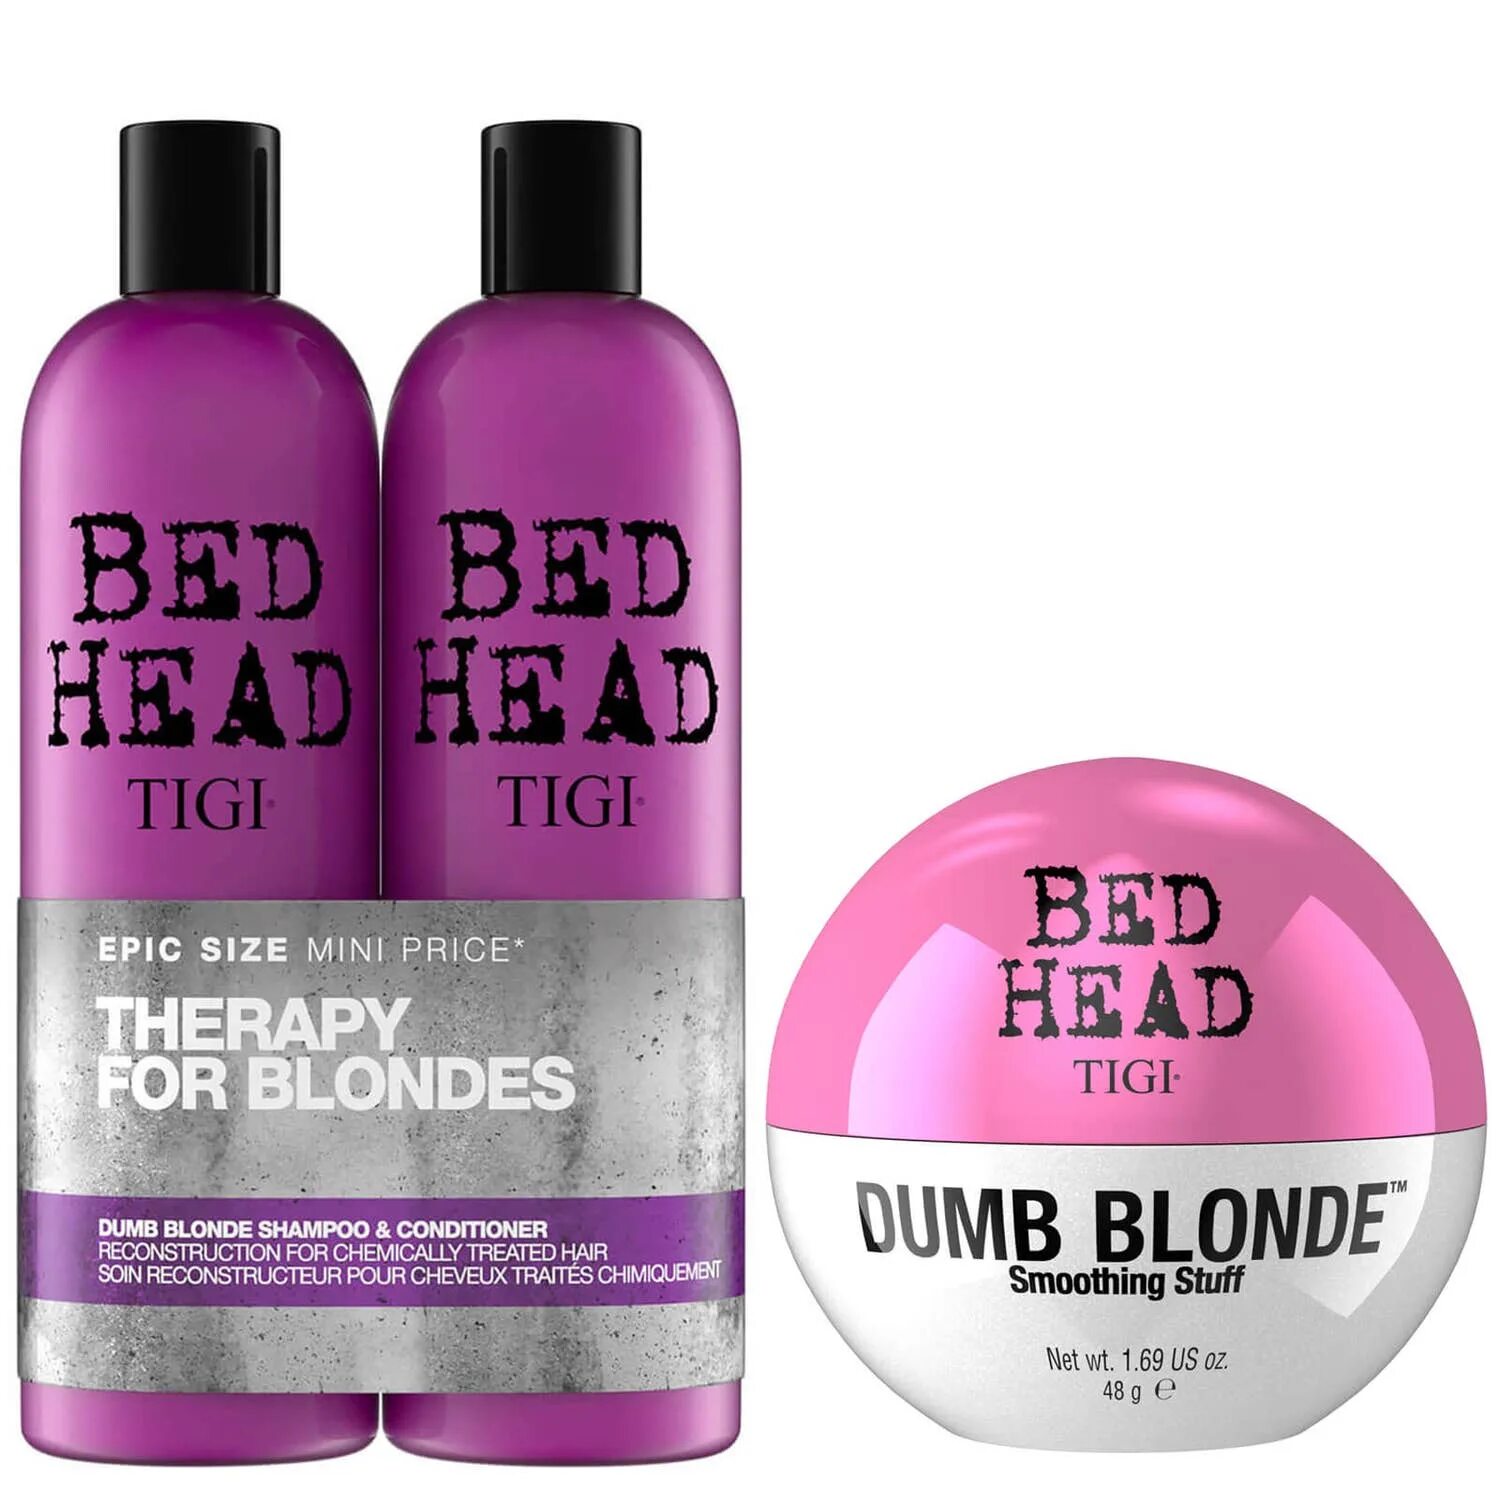 Tigi blonde. Tigi Bed head шампунь для блондинок. Bed head Tigi blond для волос.